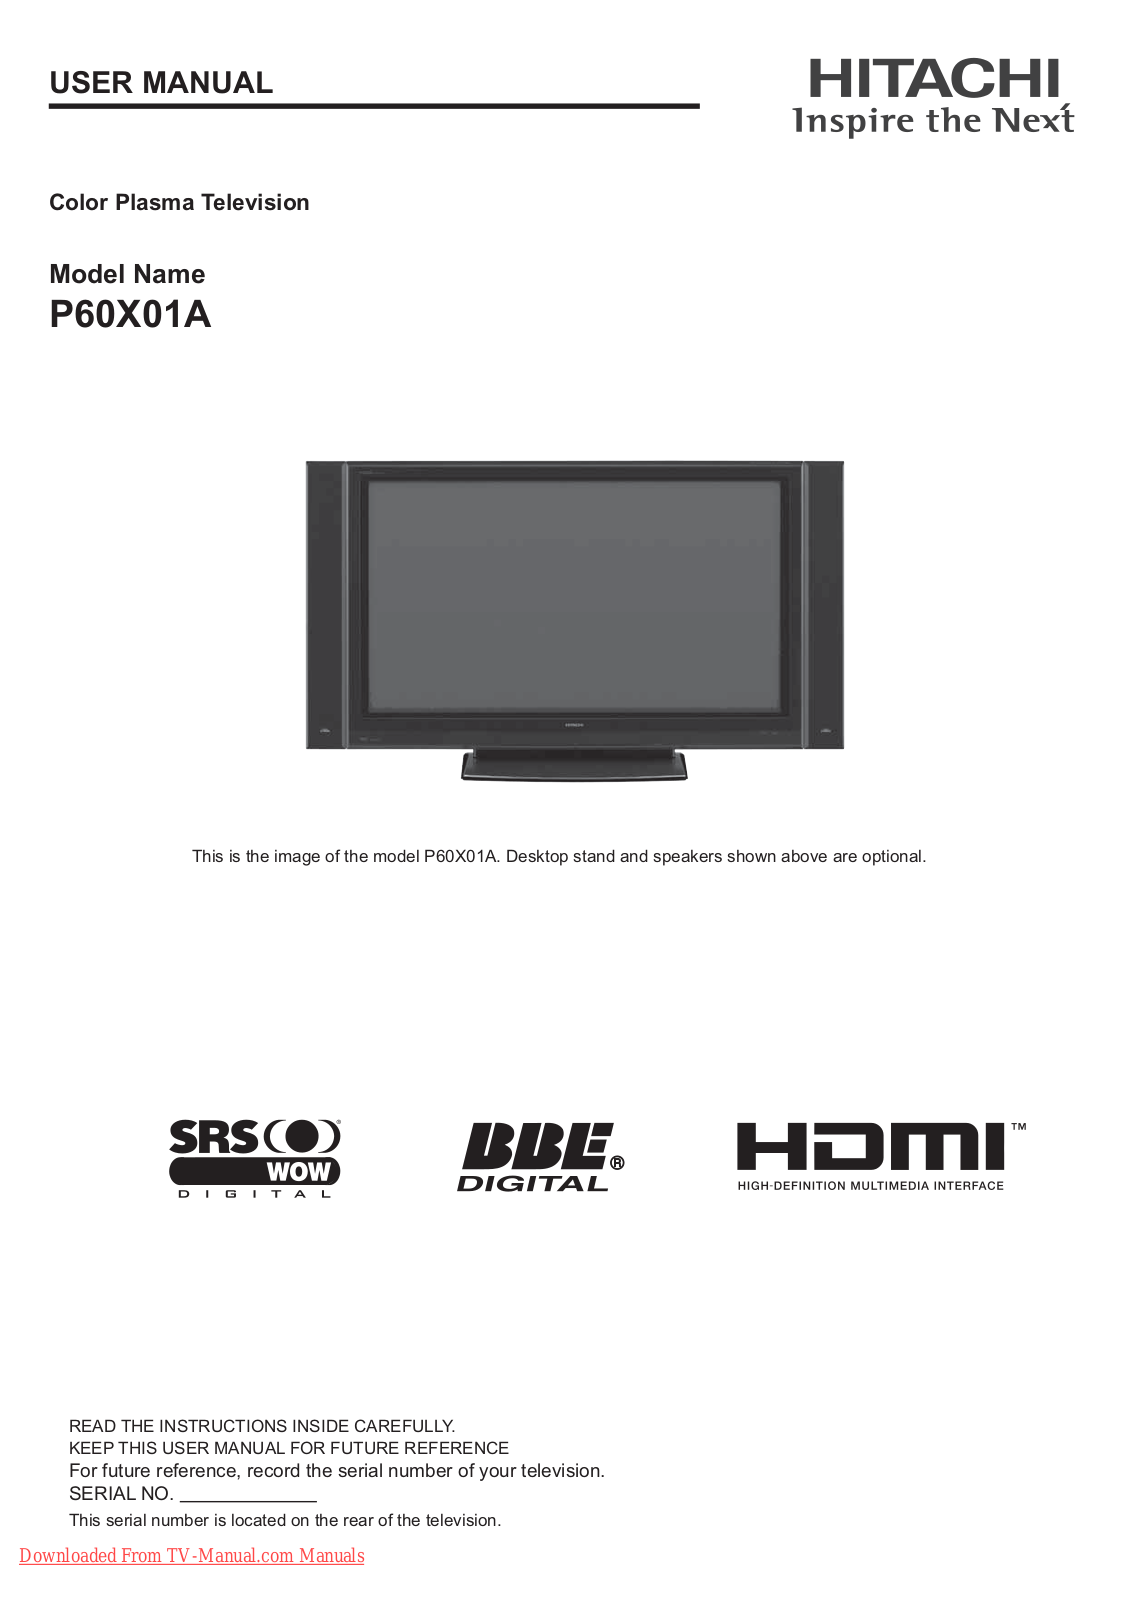 Hitachi P60X01A User Manual